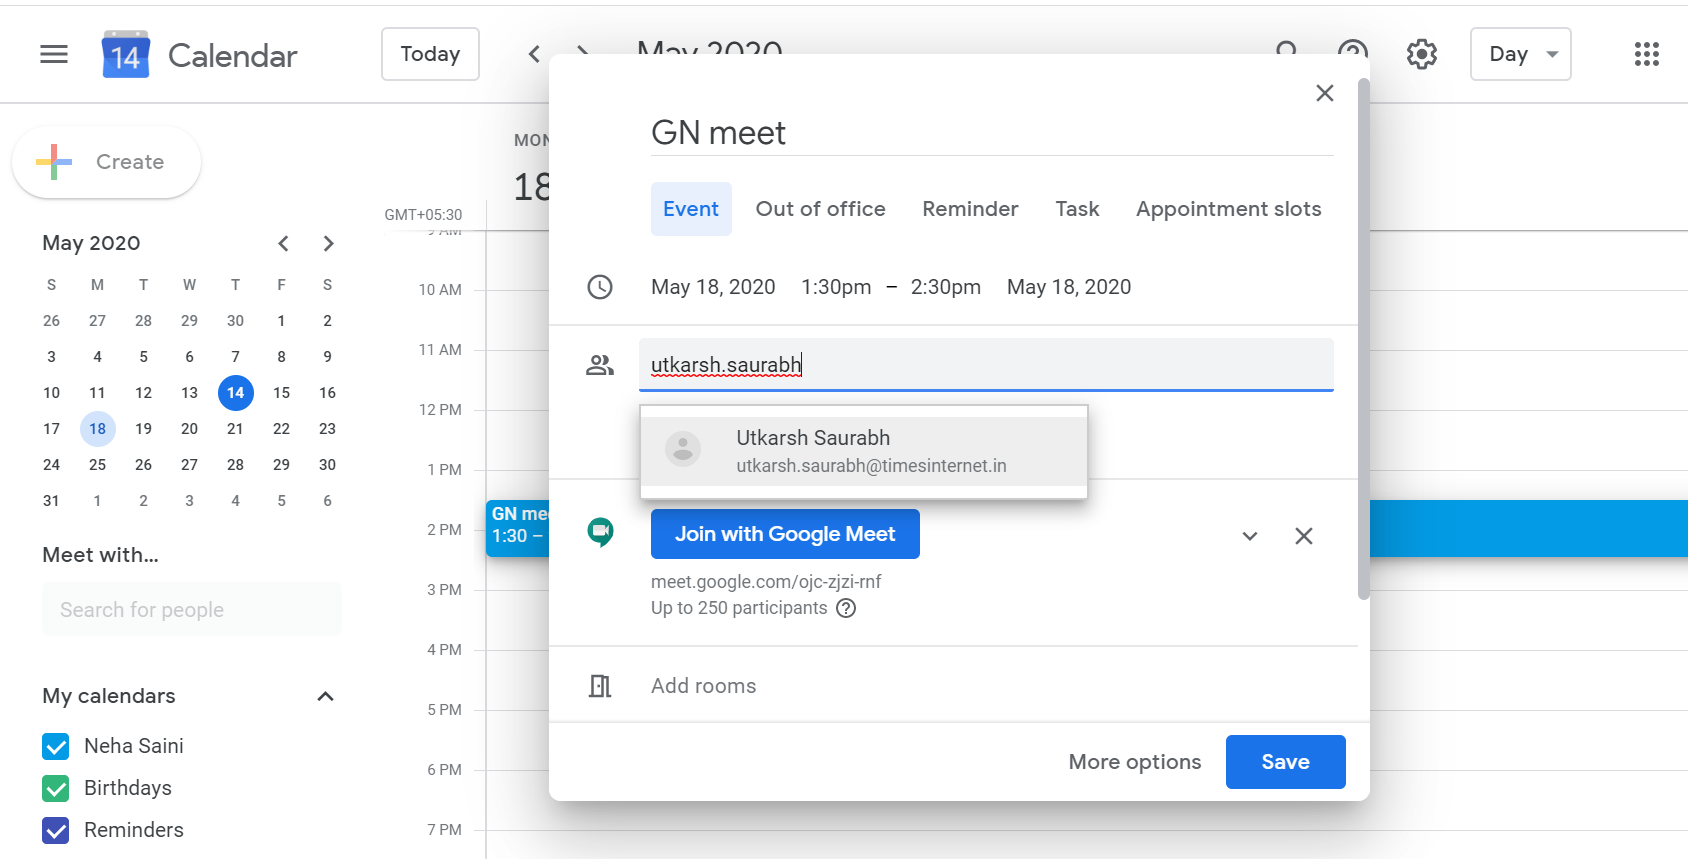 Google Meet: How to set up meetings on Google Meet, here's a short tutorial